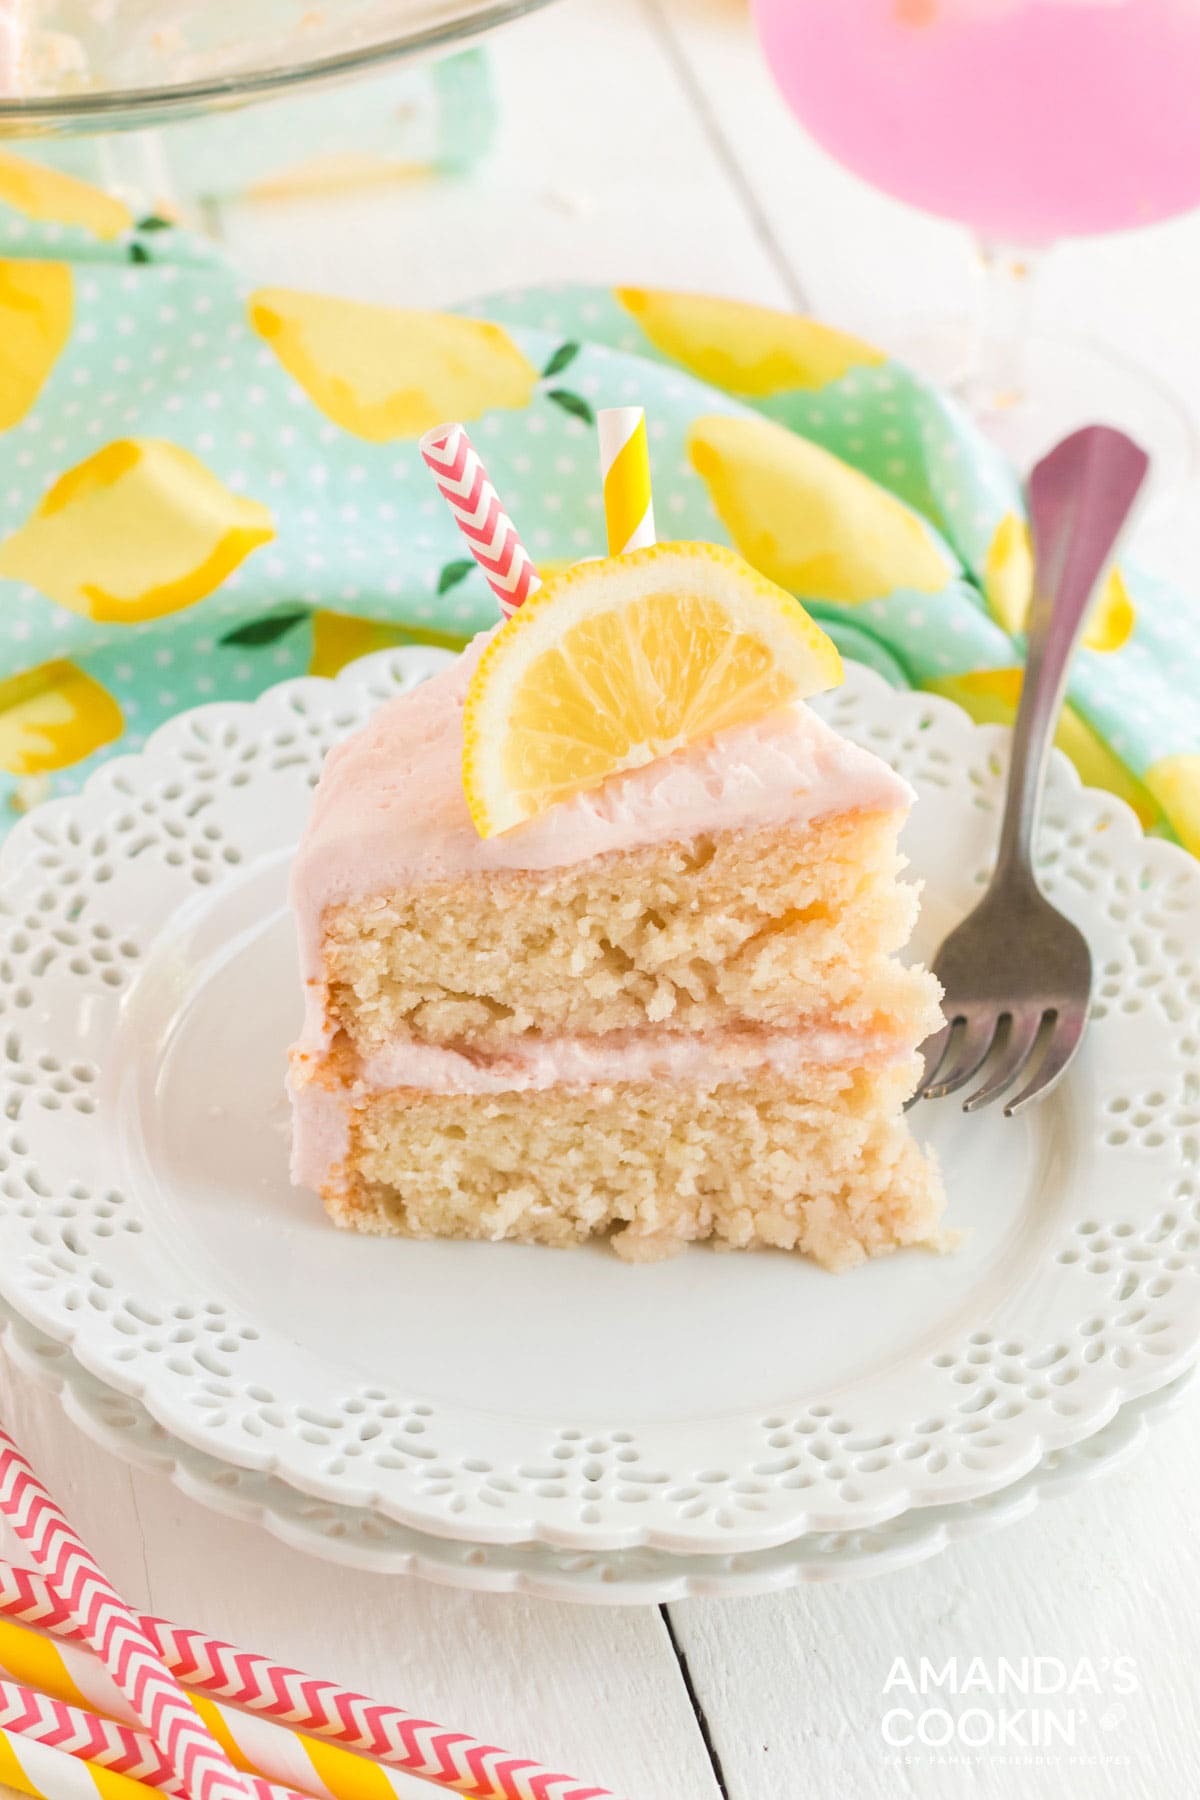 Slice of pink lemonade cake on a plate